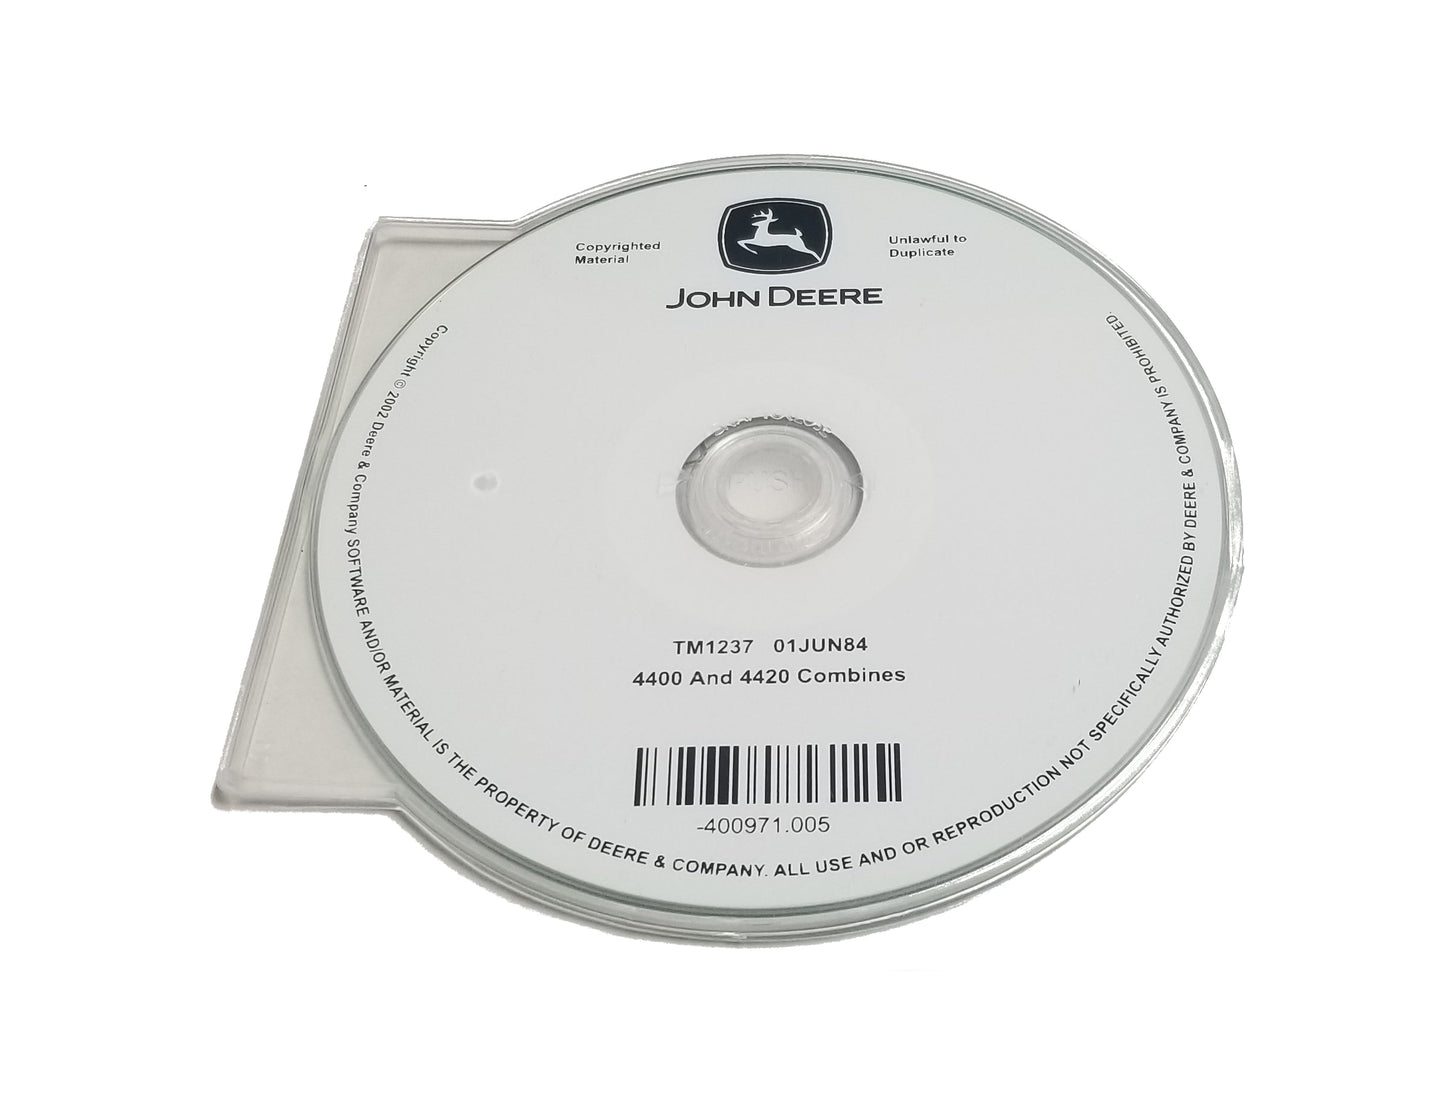 John Deere 4400/4420 Combines Technical CD Manual - TM1237CD